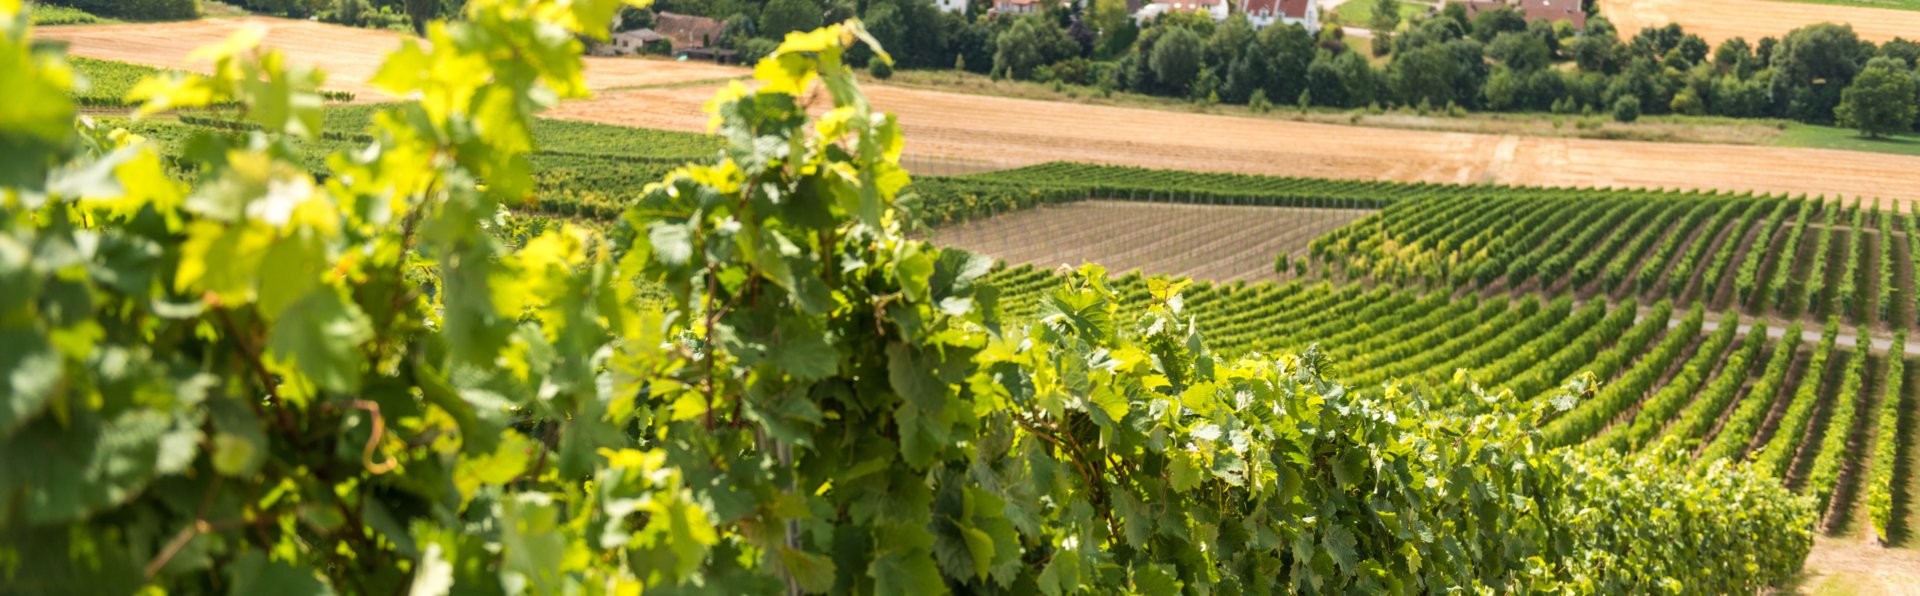 Germany's largest wine-growing region